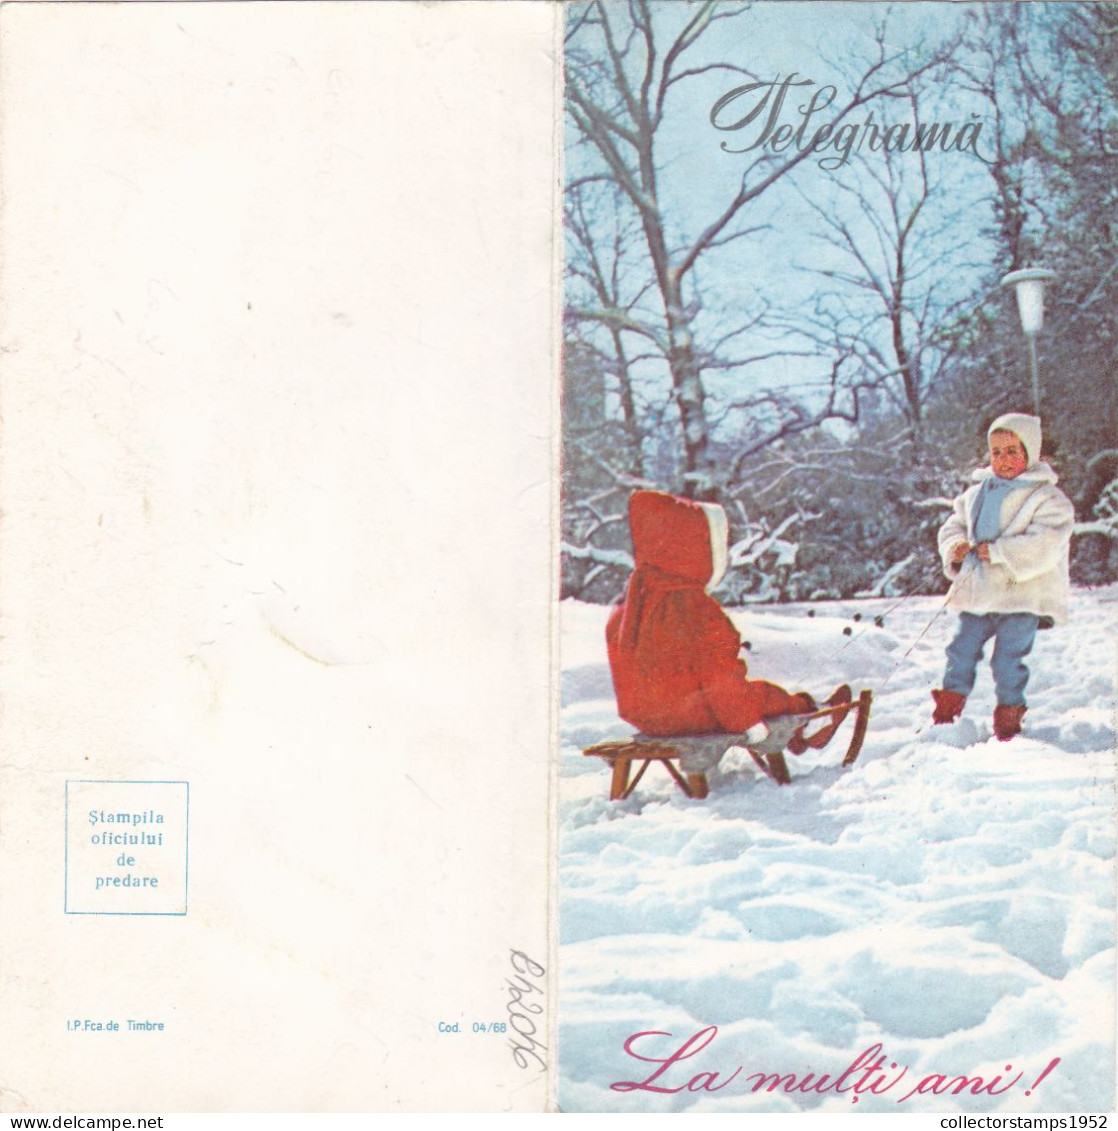 Winter WITH Sledding,TELEGRAM, TELEGRAPH, 1968, ROMANIA,cod.04/68,LTLx2 - Telegraphenmarken